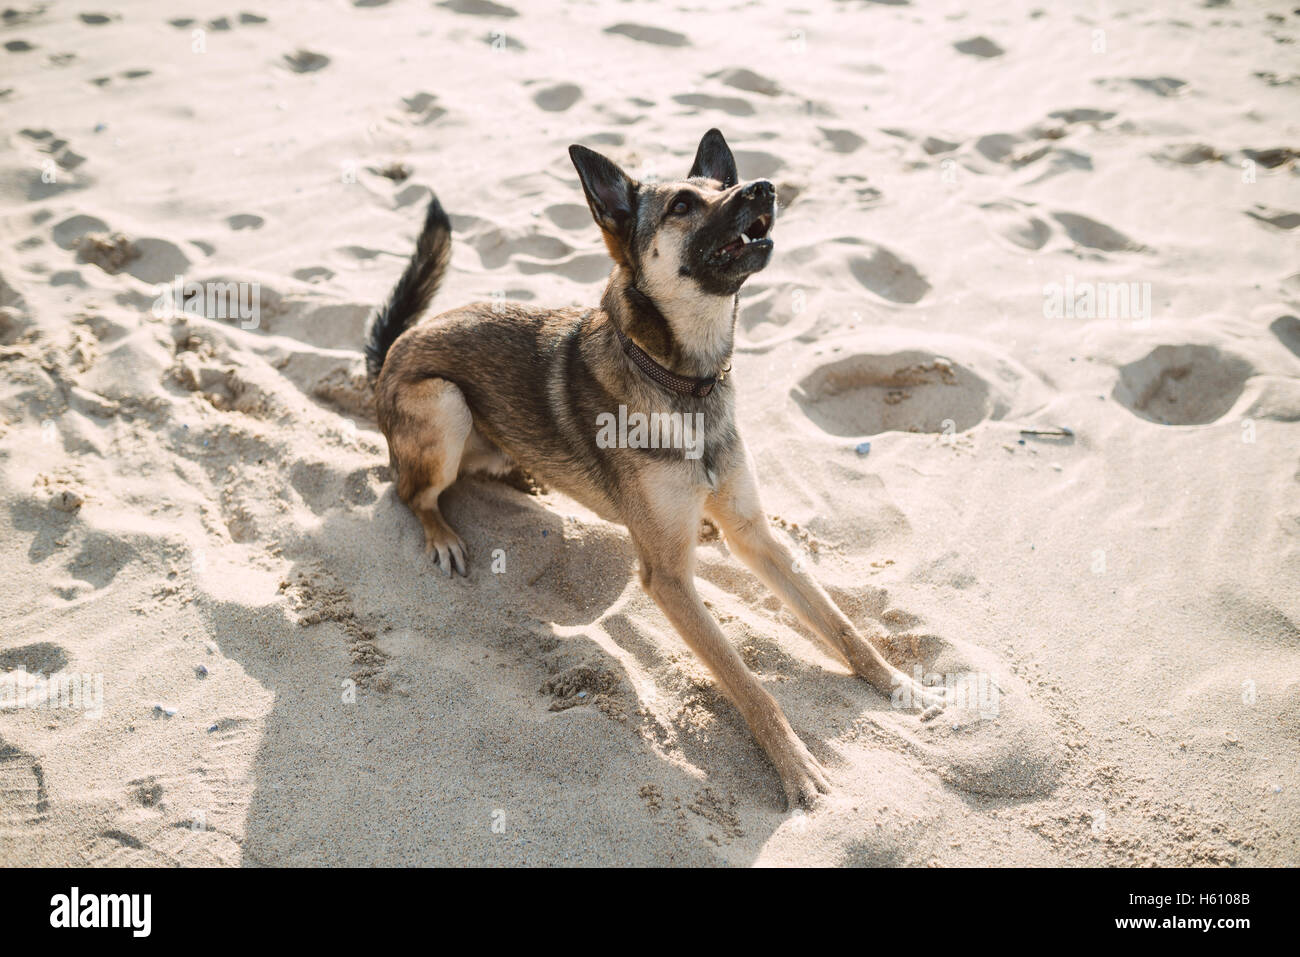 German shepherd dog playing on the beach. Dog is alert. Stock Photo